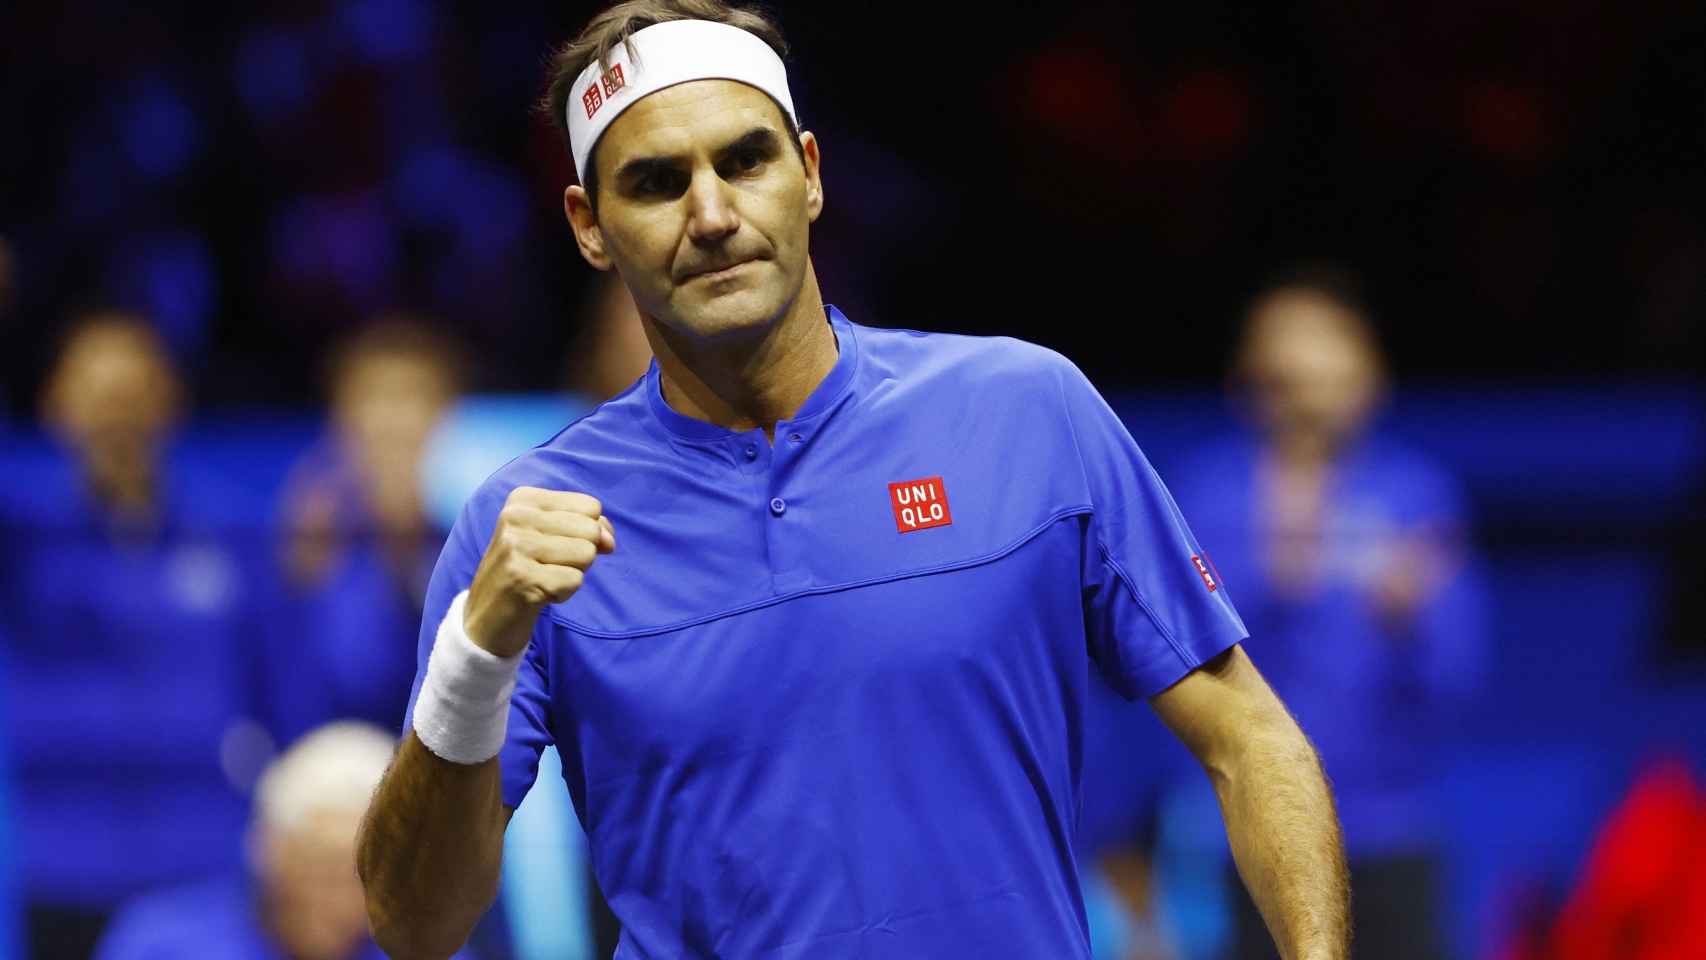 Roger Federer celebra un punto con rabia